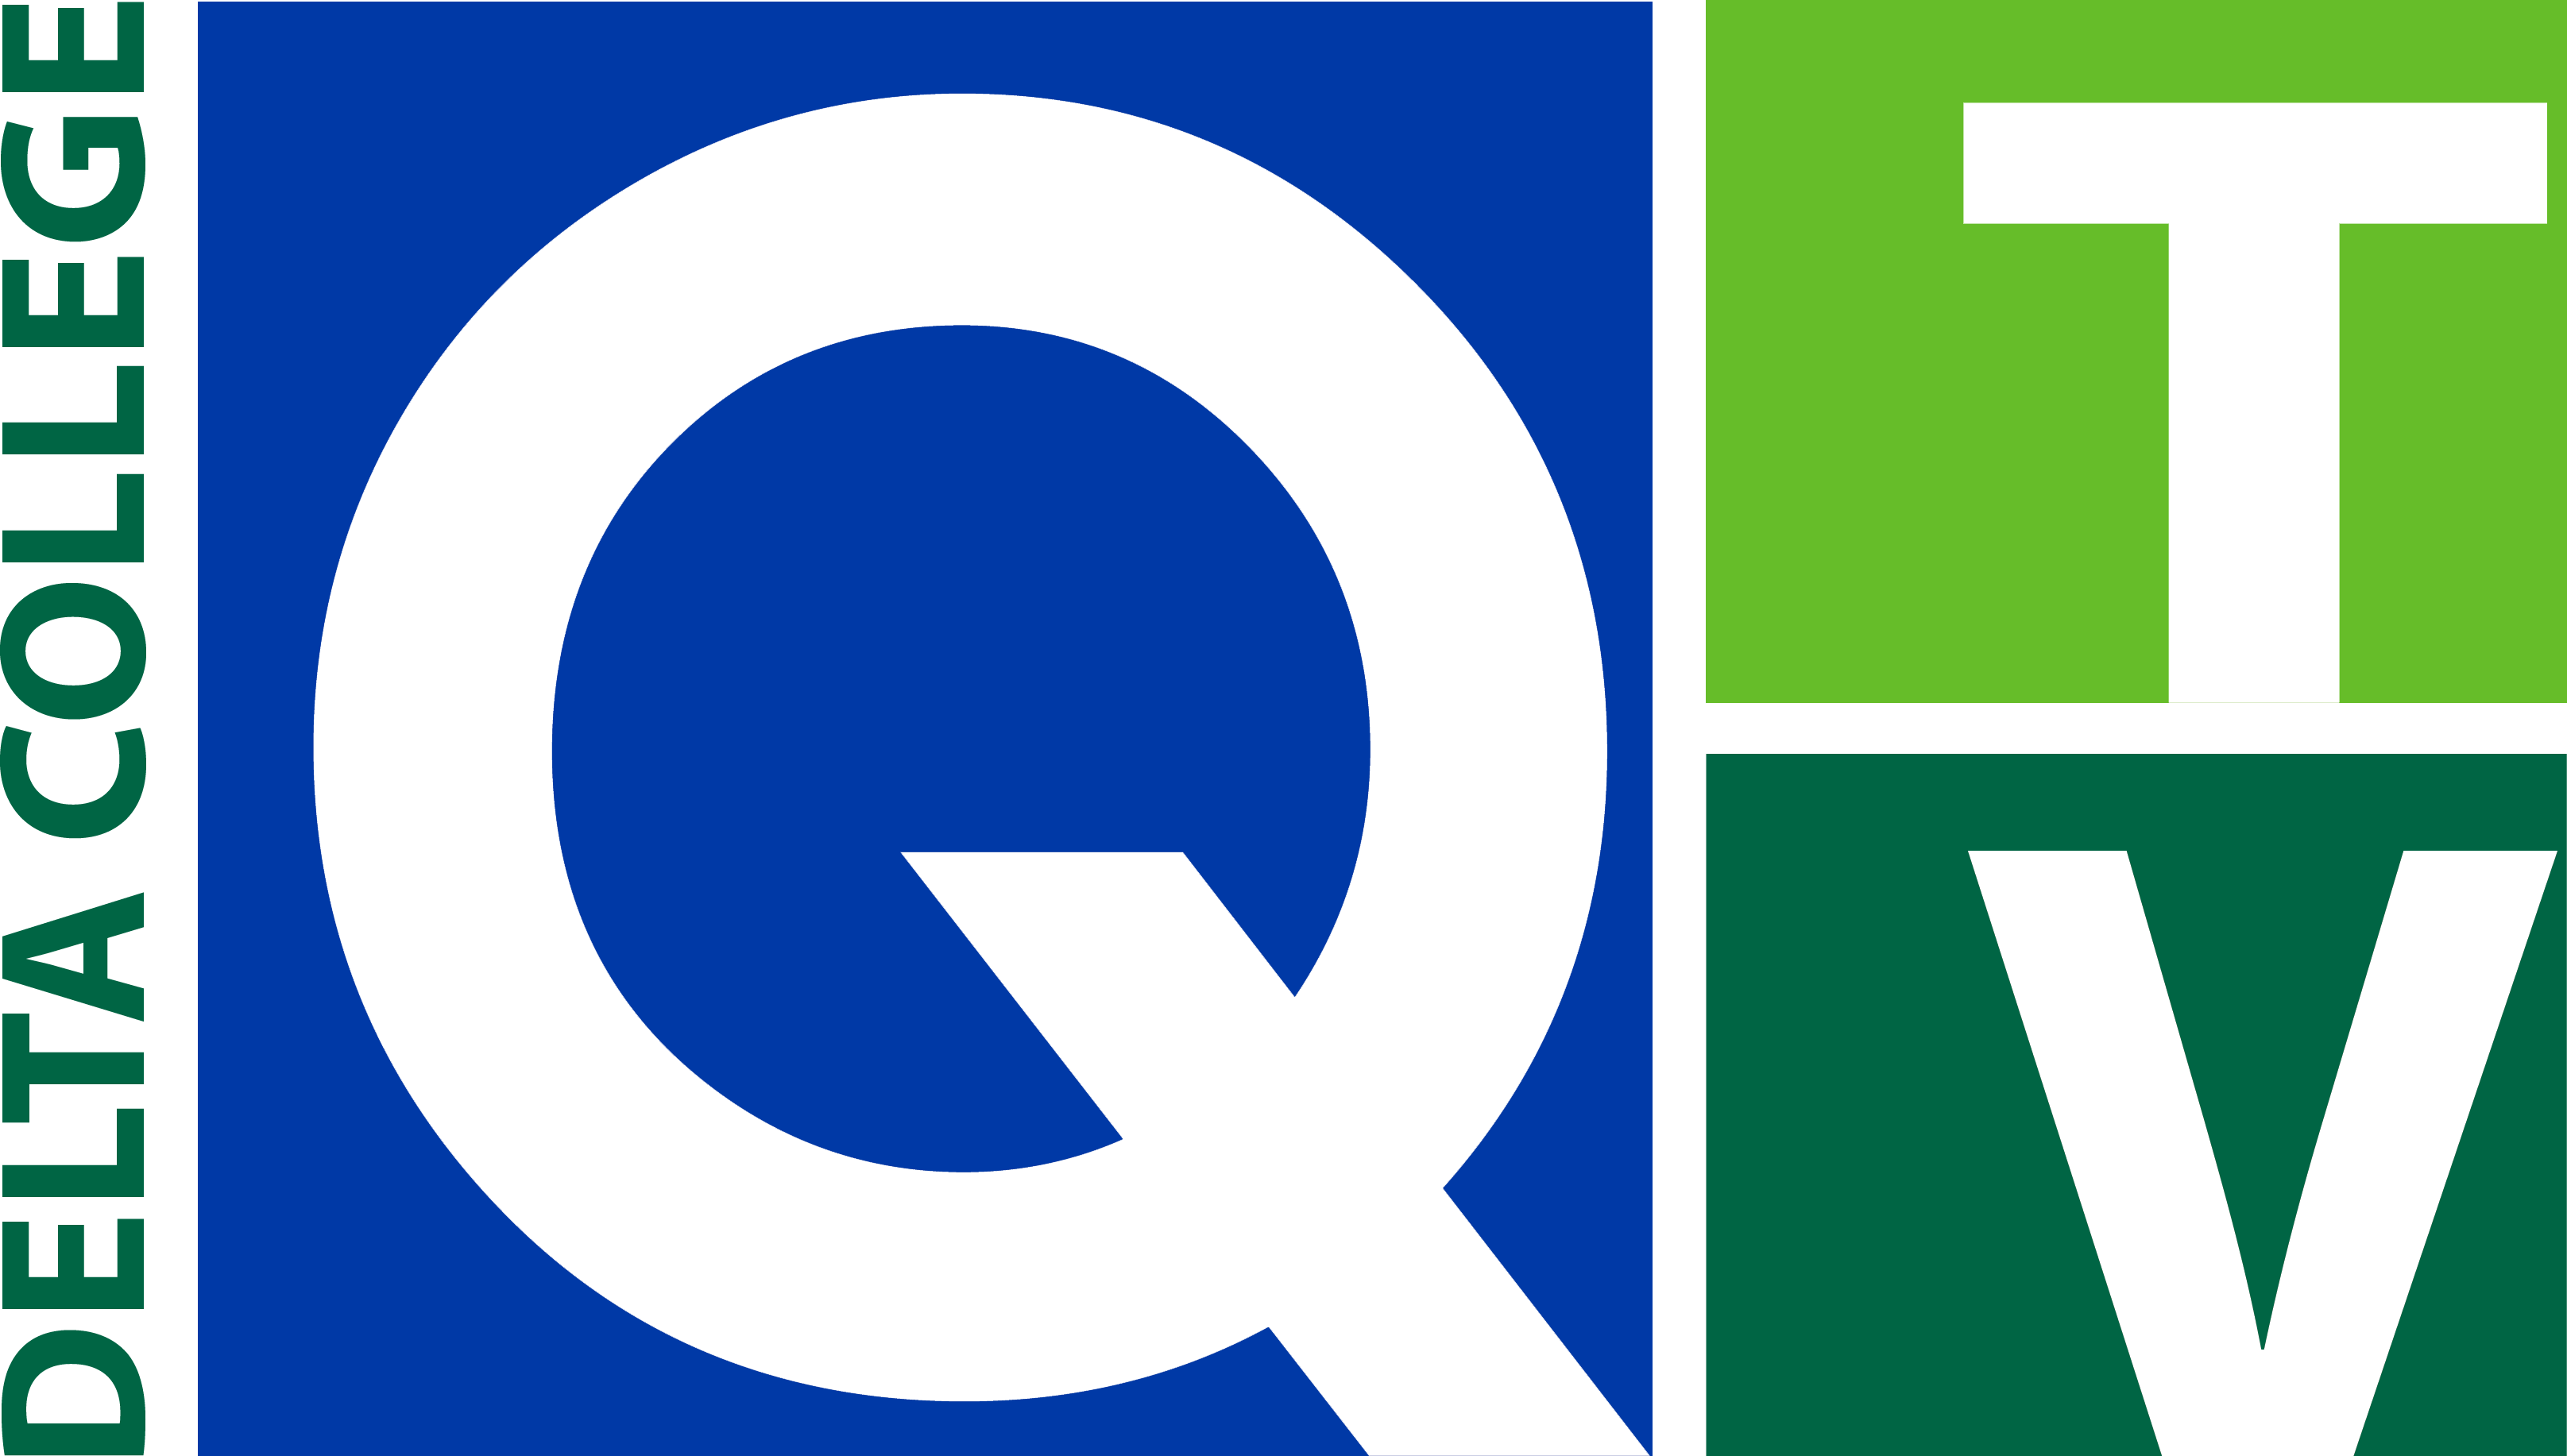 Q Symbol in Logo - Brand Resources | Delta Broadcasting